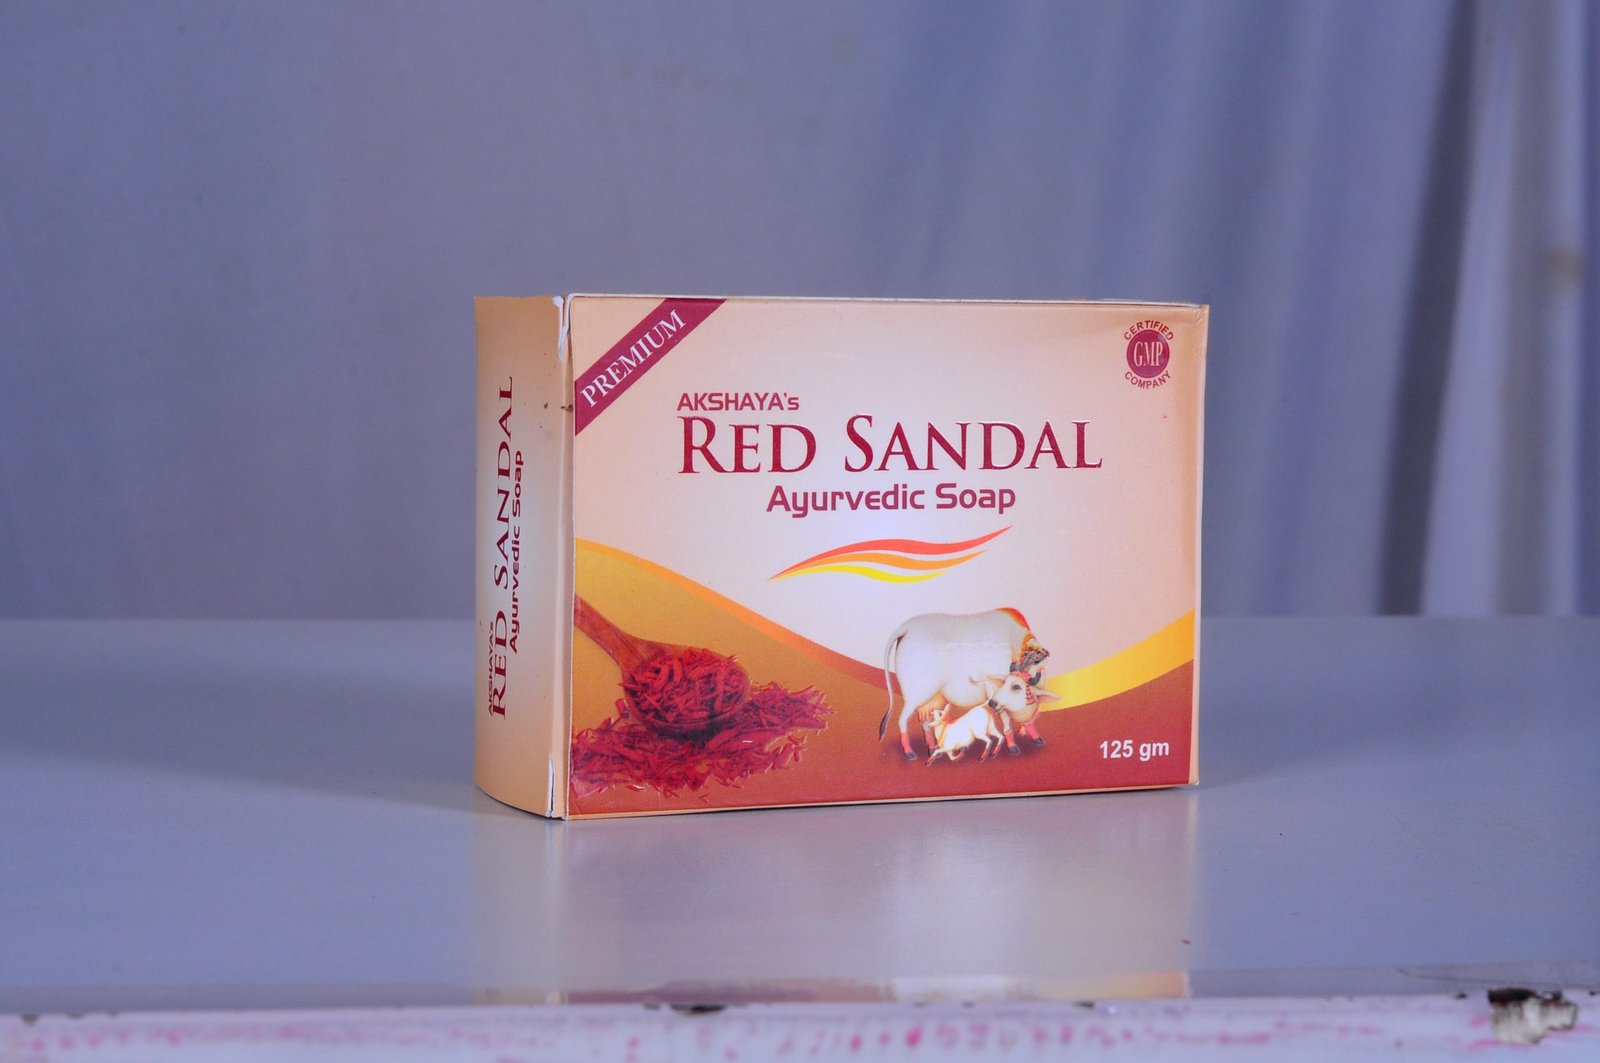 Akshaya's Red Sandal Ayurvedic Soap